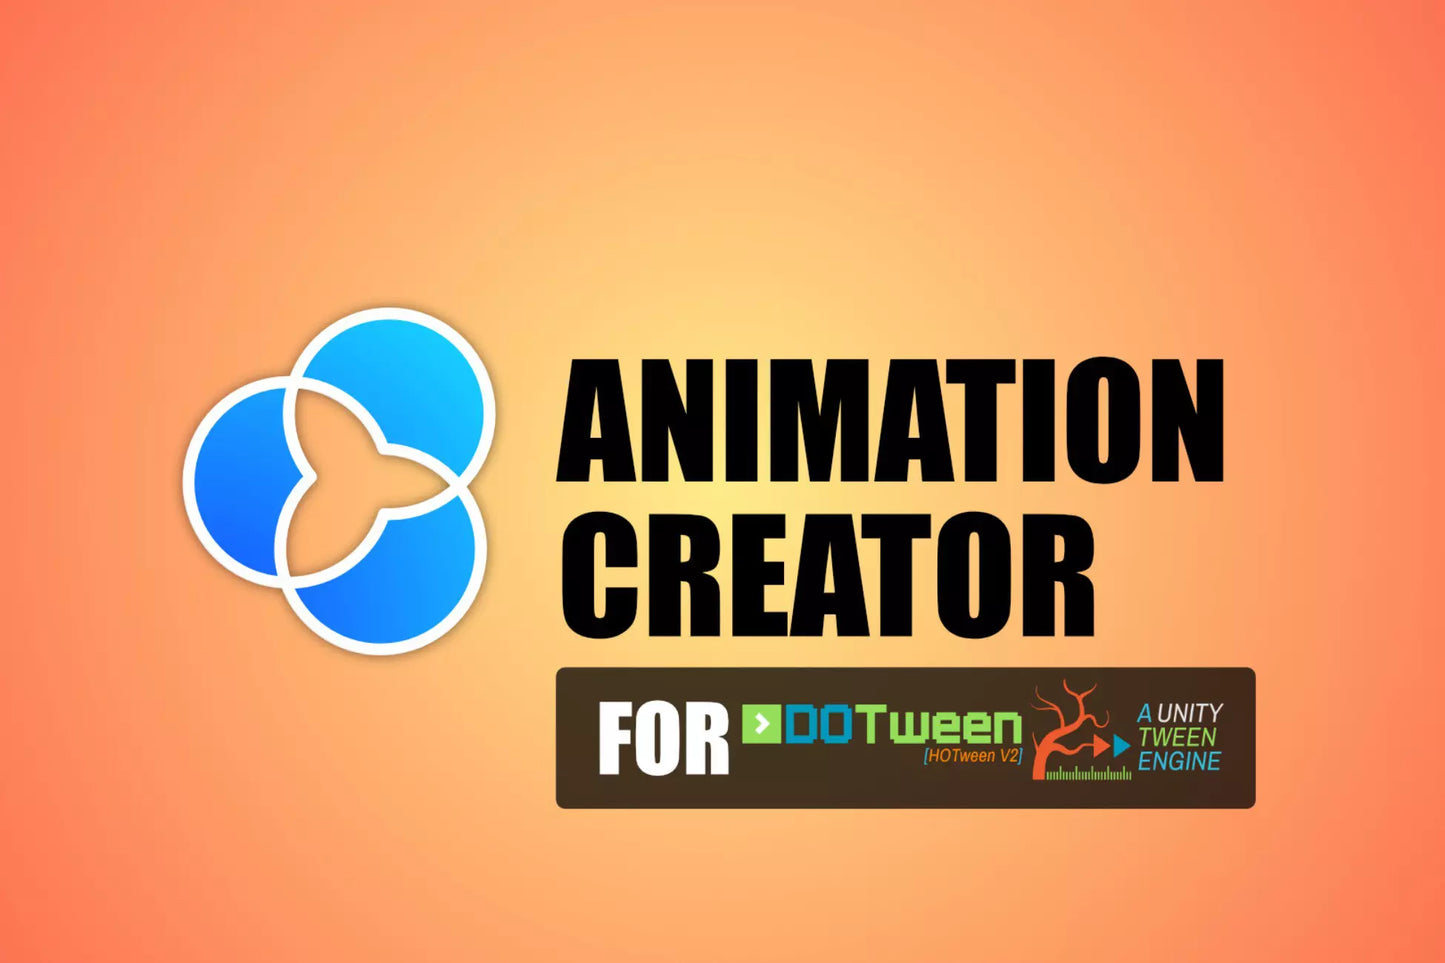 Animation Creator For Dotween